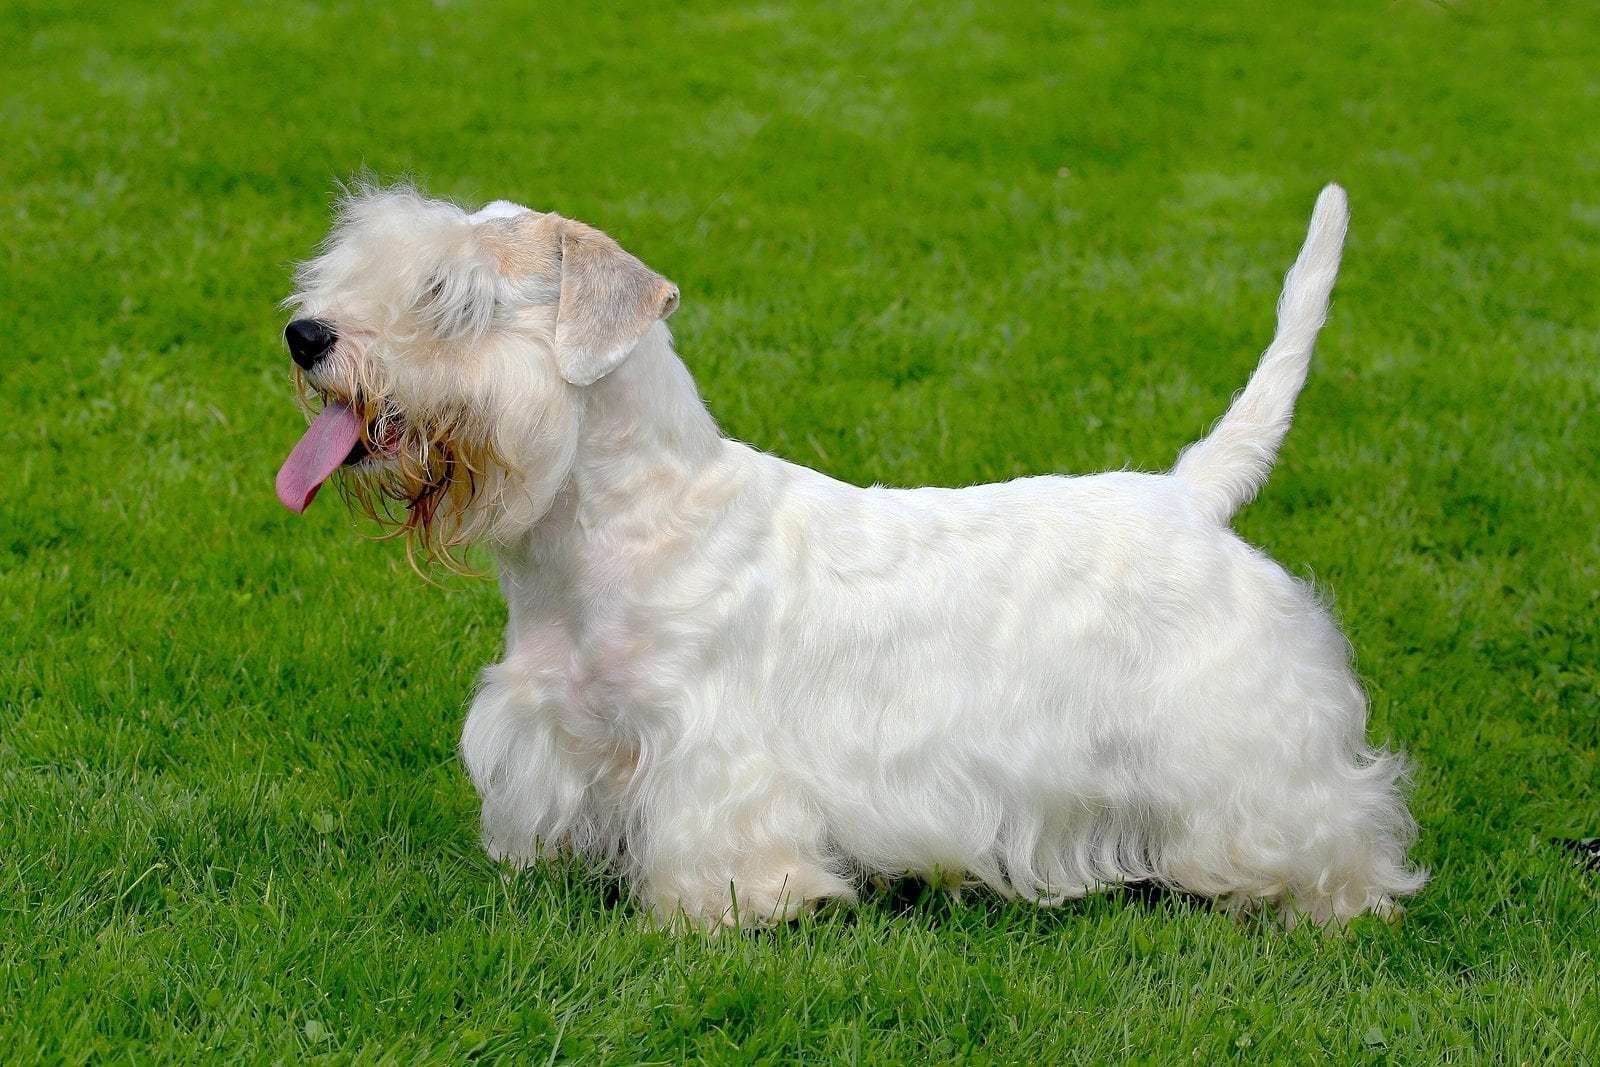 Small white dog breeds